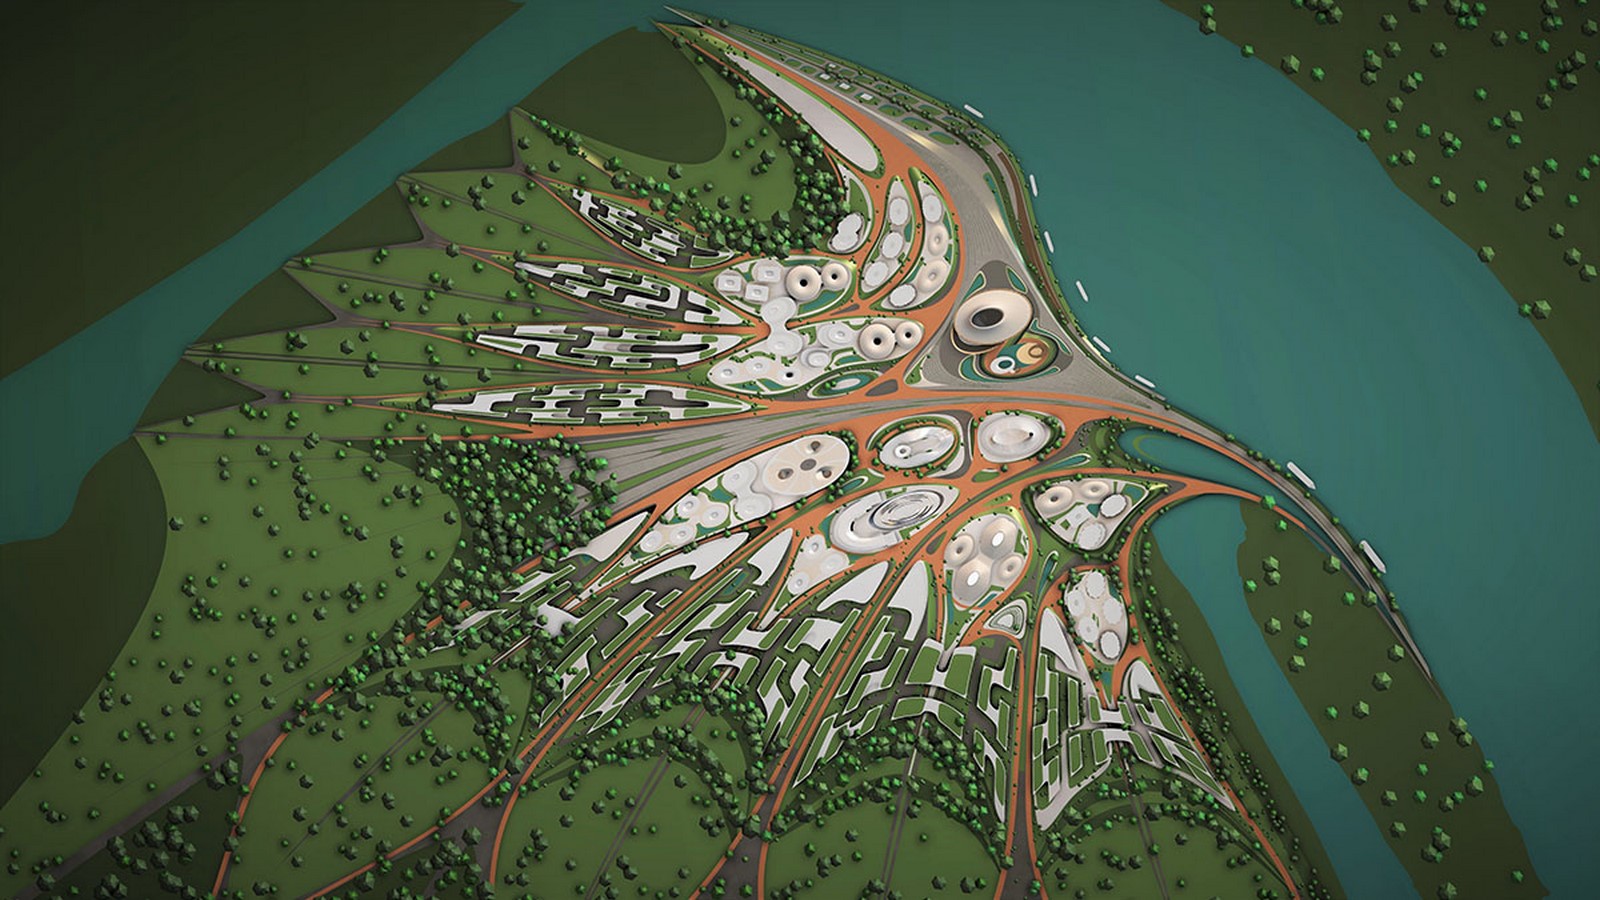 "Cyber-Urban" Metaverse City revealed by Zaha Hadid Architects - Sheet1